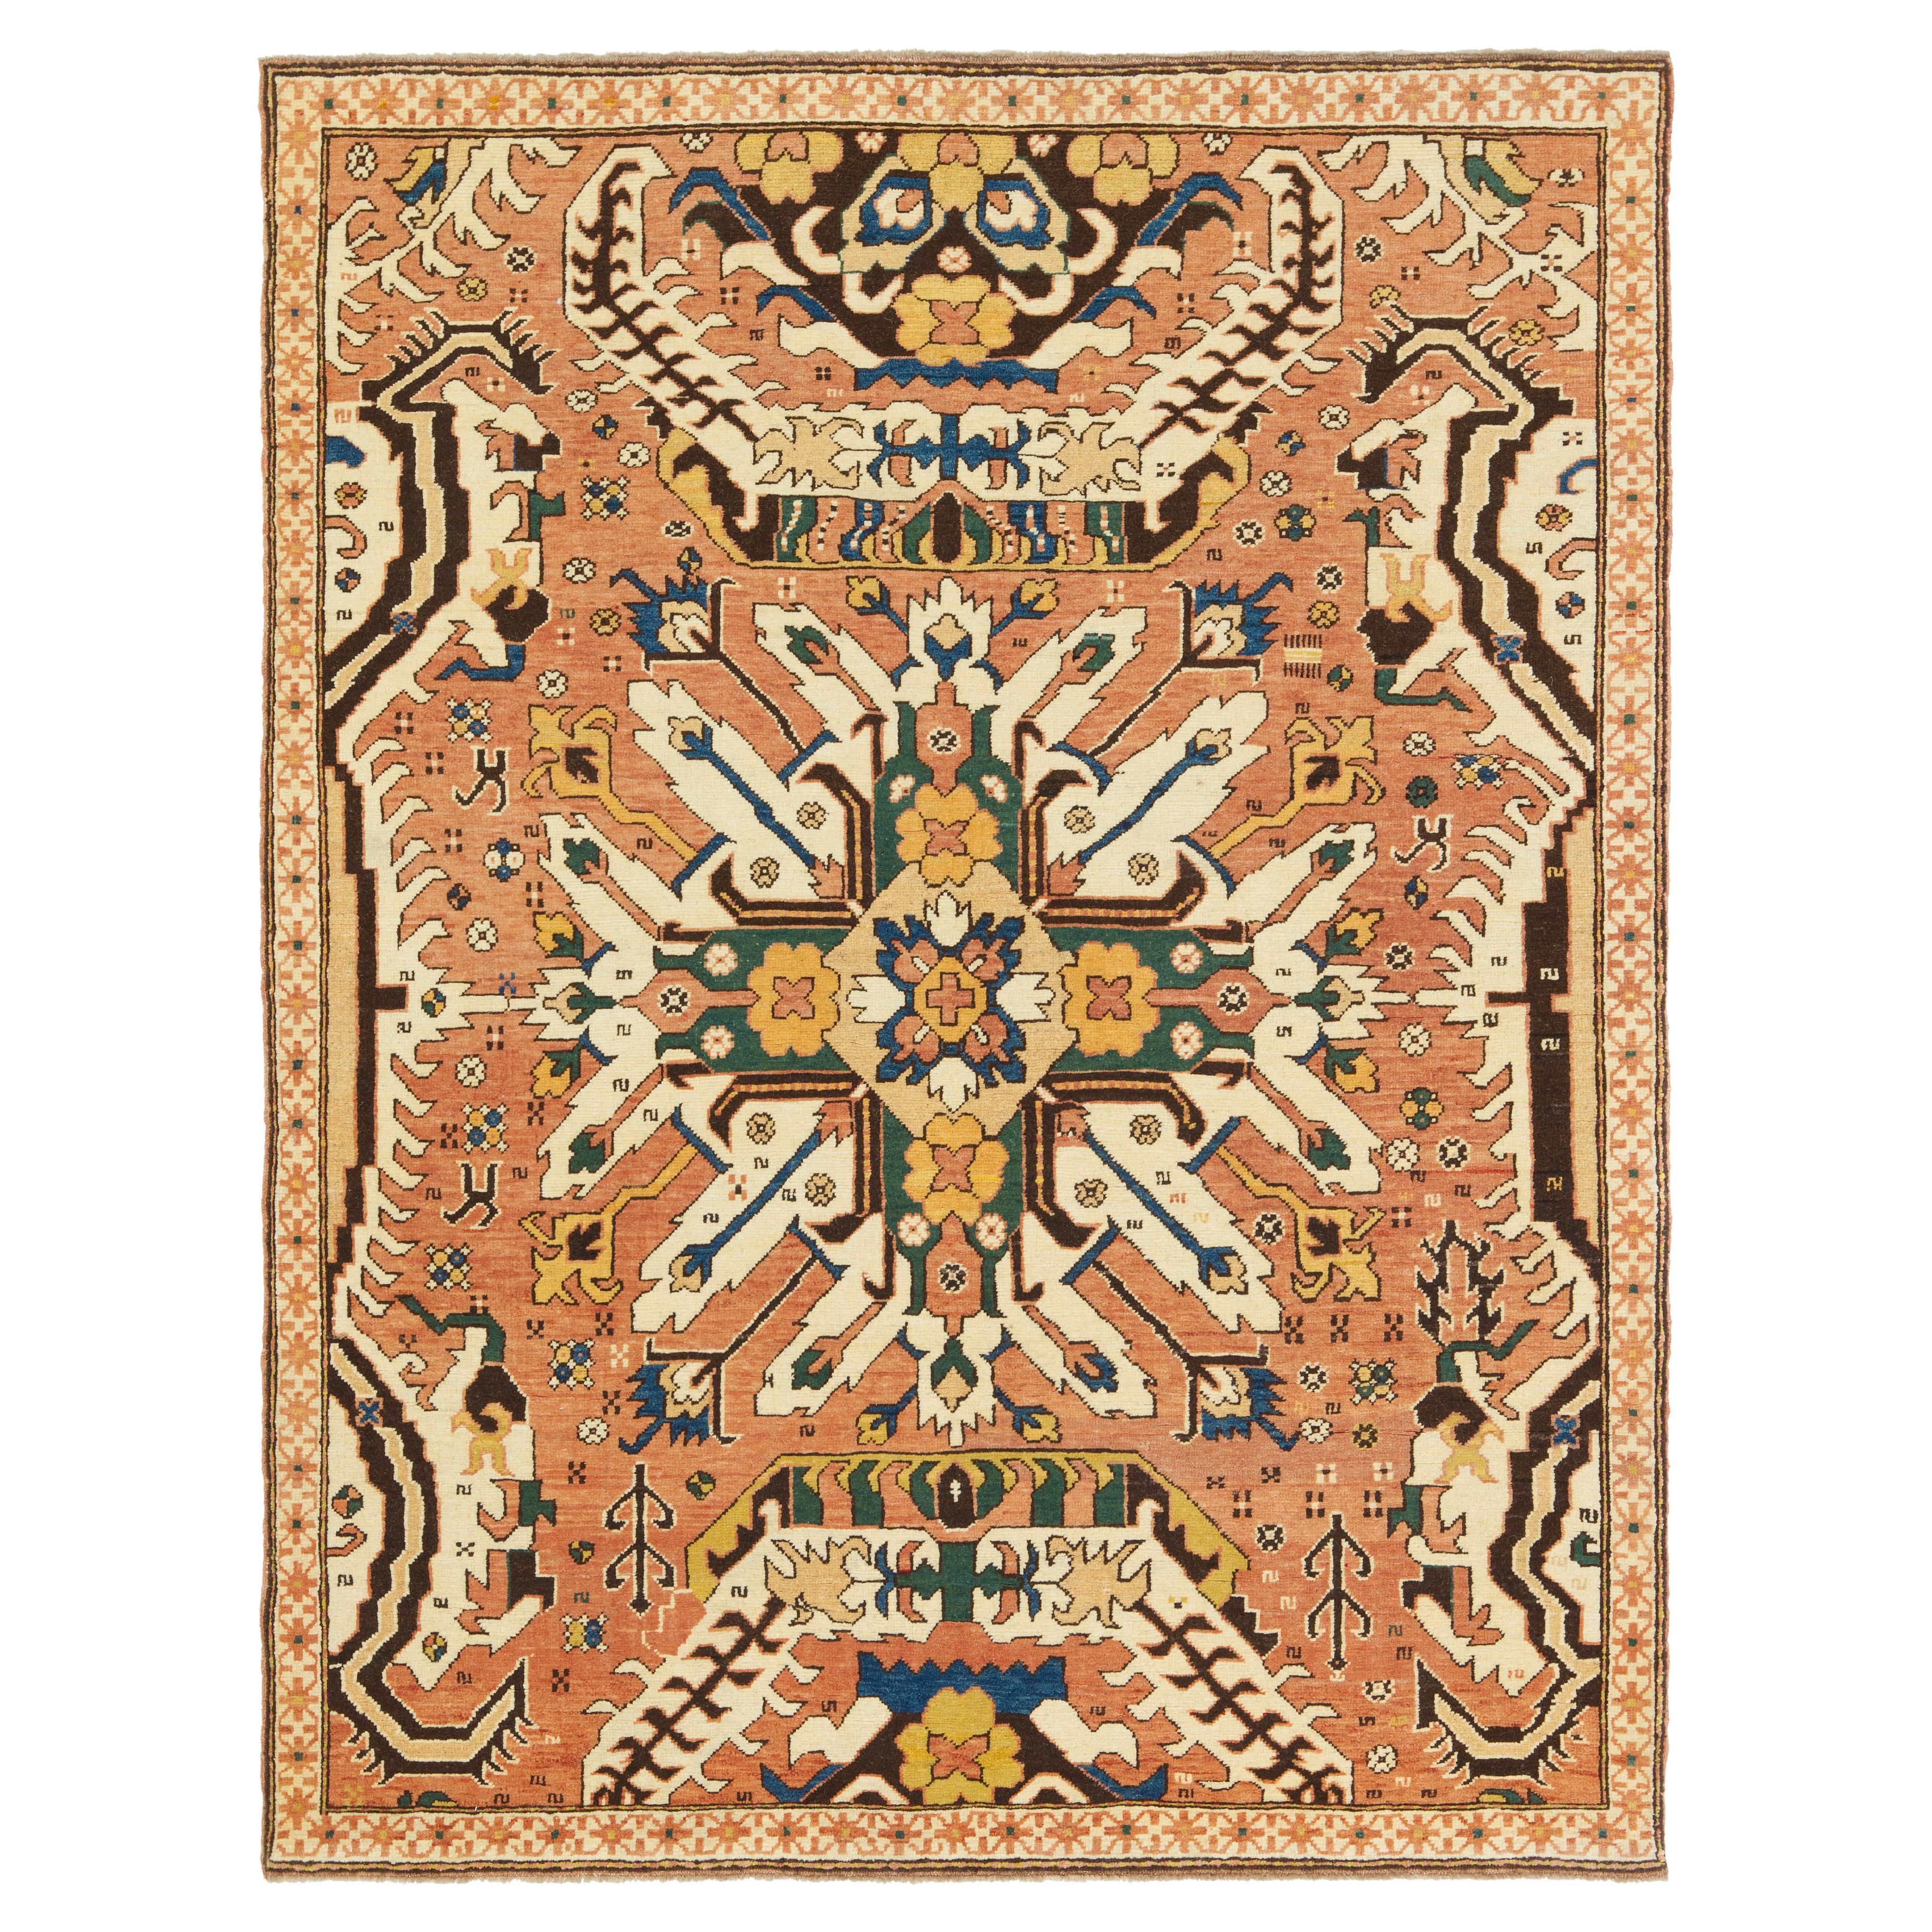 Ararat Rugs Chelaberd Karabakh Rug Antique Caucasian Revival Carpet Natural Dyed